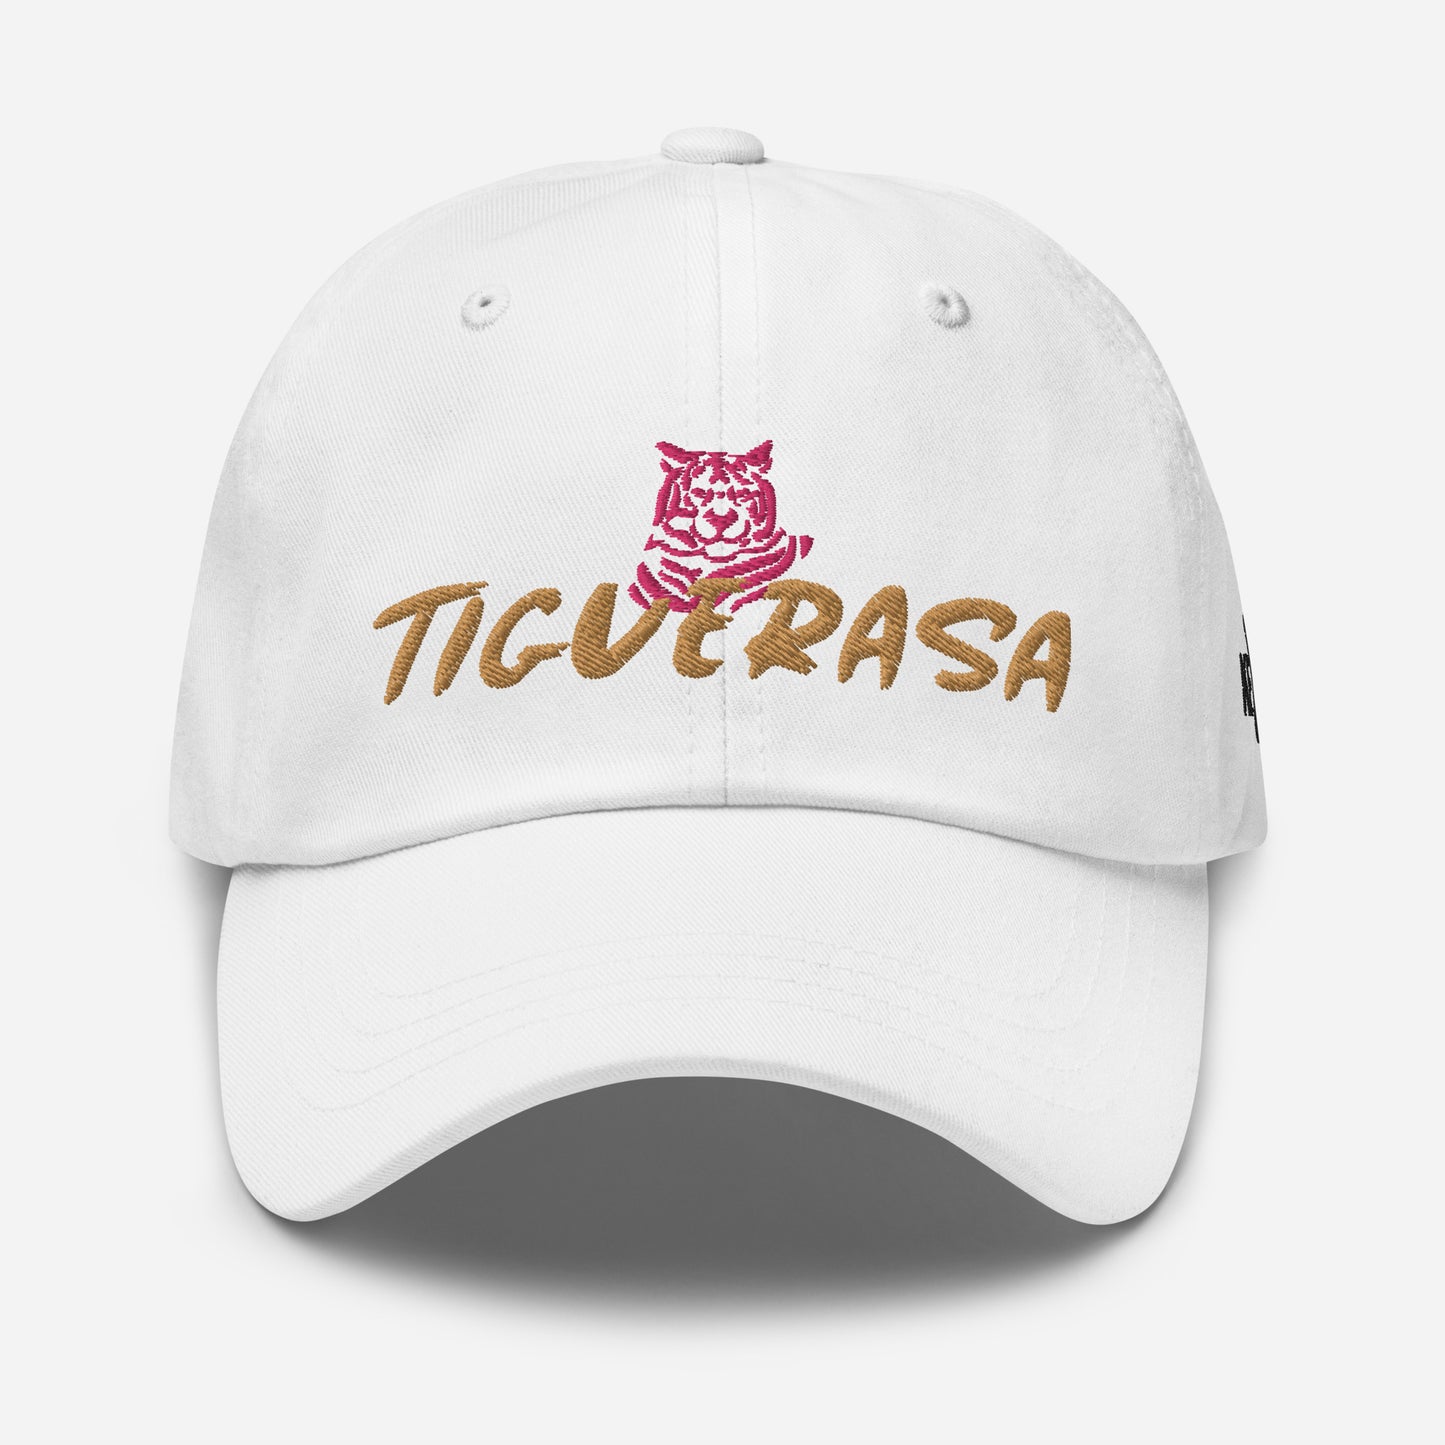 KeCaché "Tiguerasa" Hat